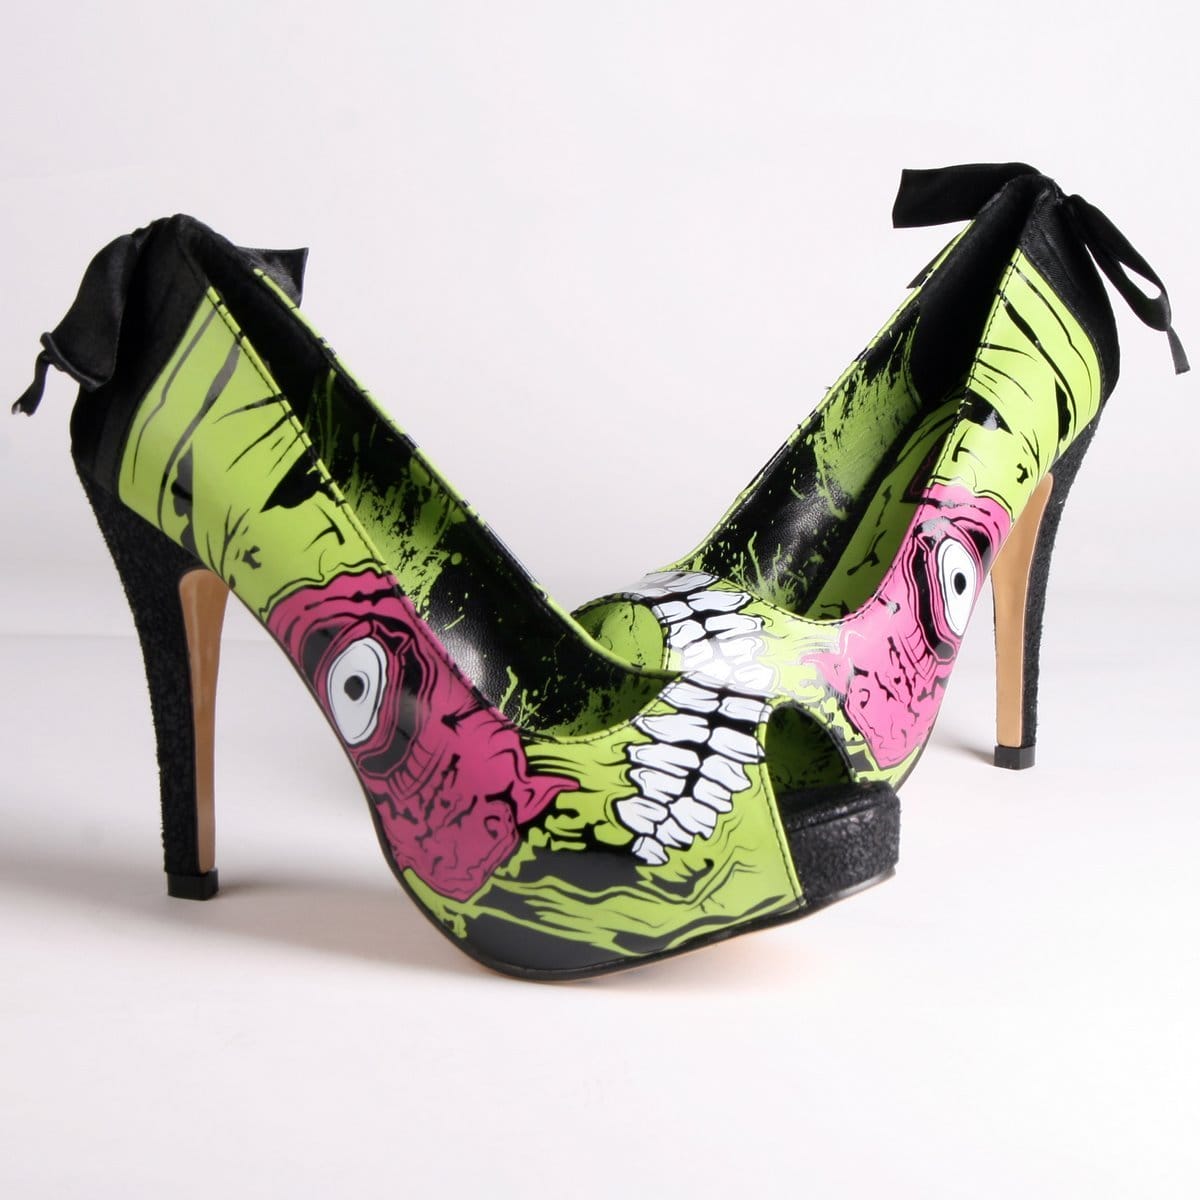 Zombie shoes